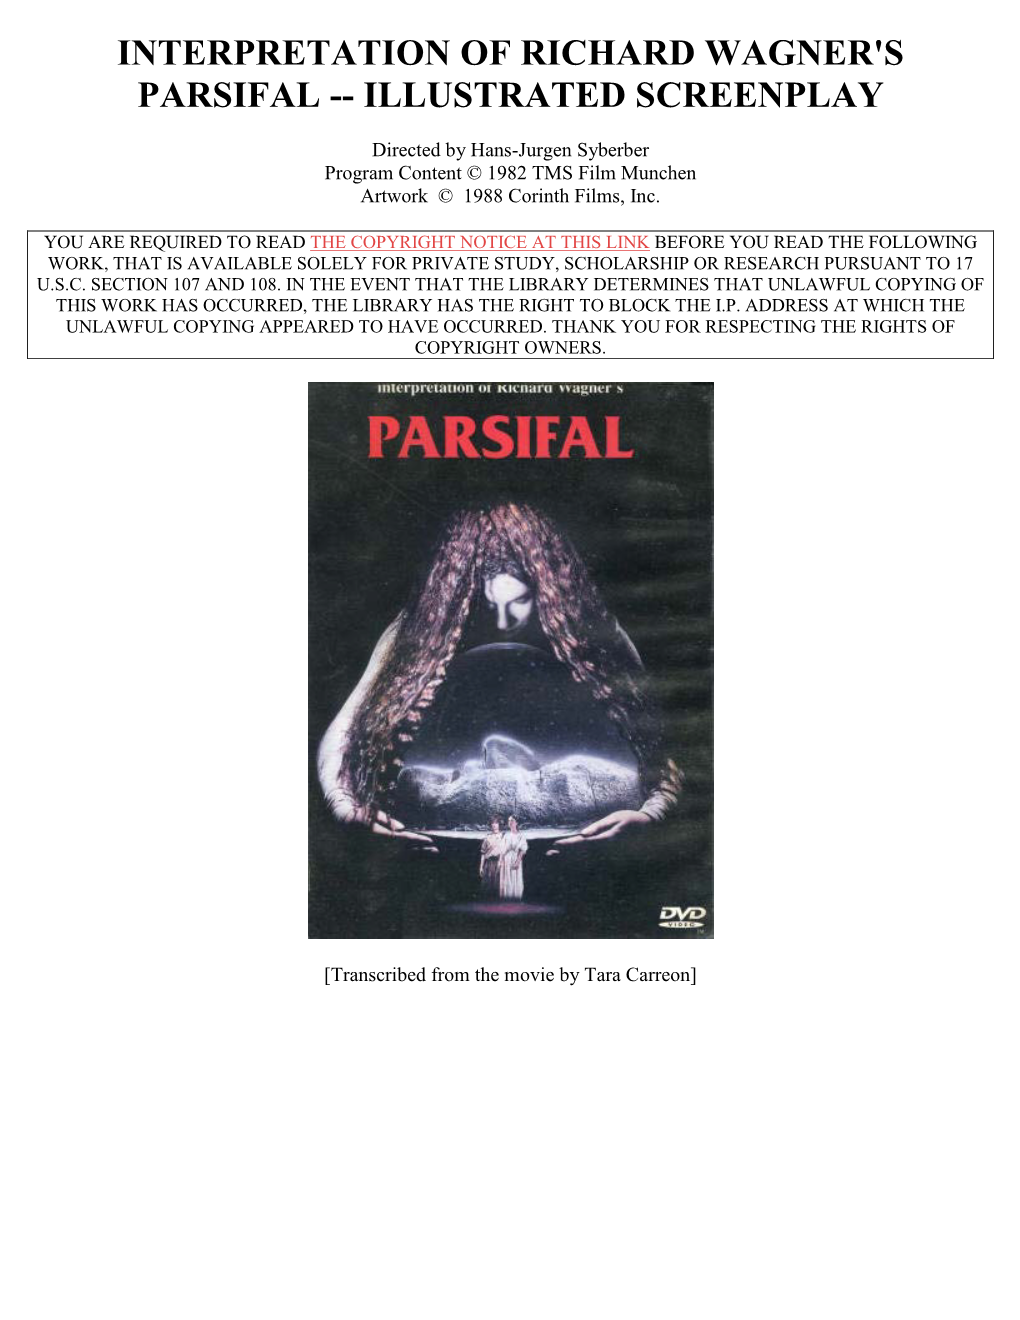 Interpretation of Richard Wagner's Parsifal -- Illustrated Screenplay